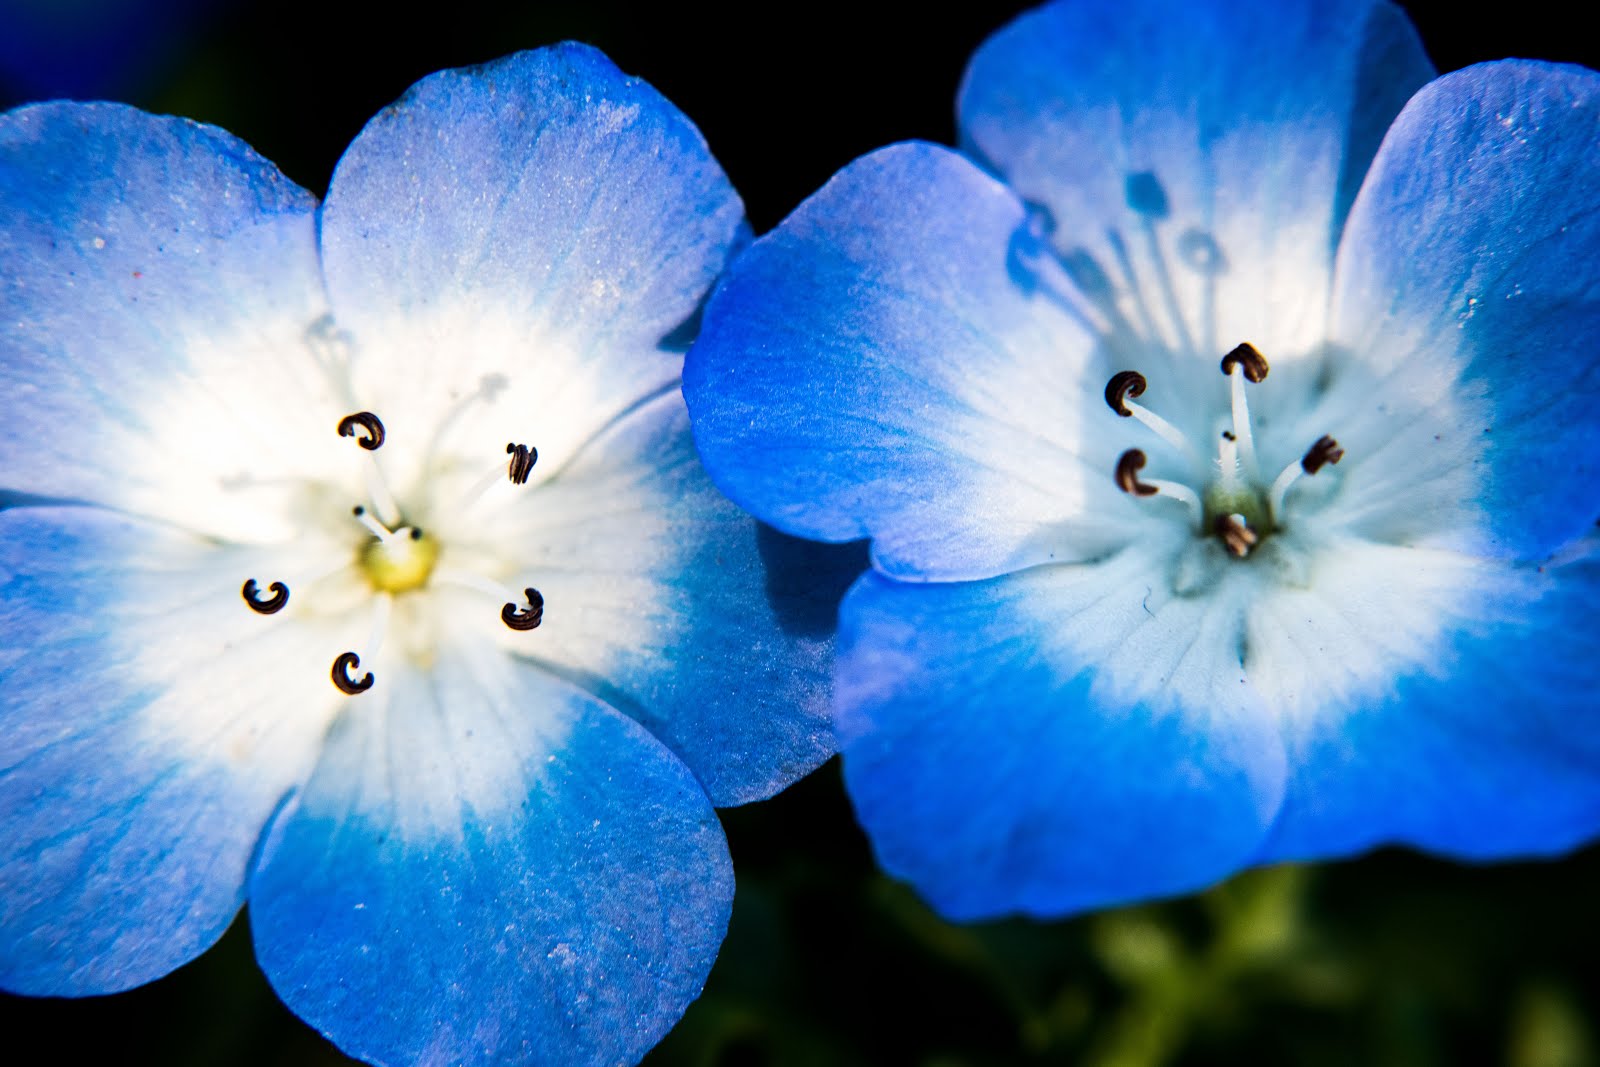 Nemophila flowers - the baby blue eyes - macro photo